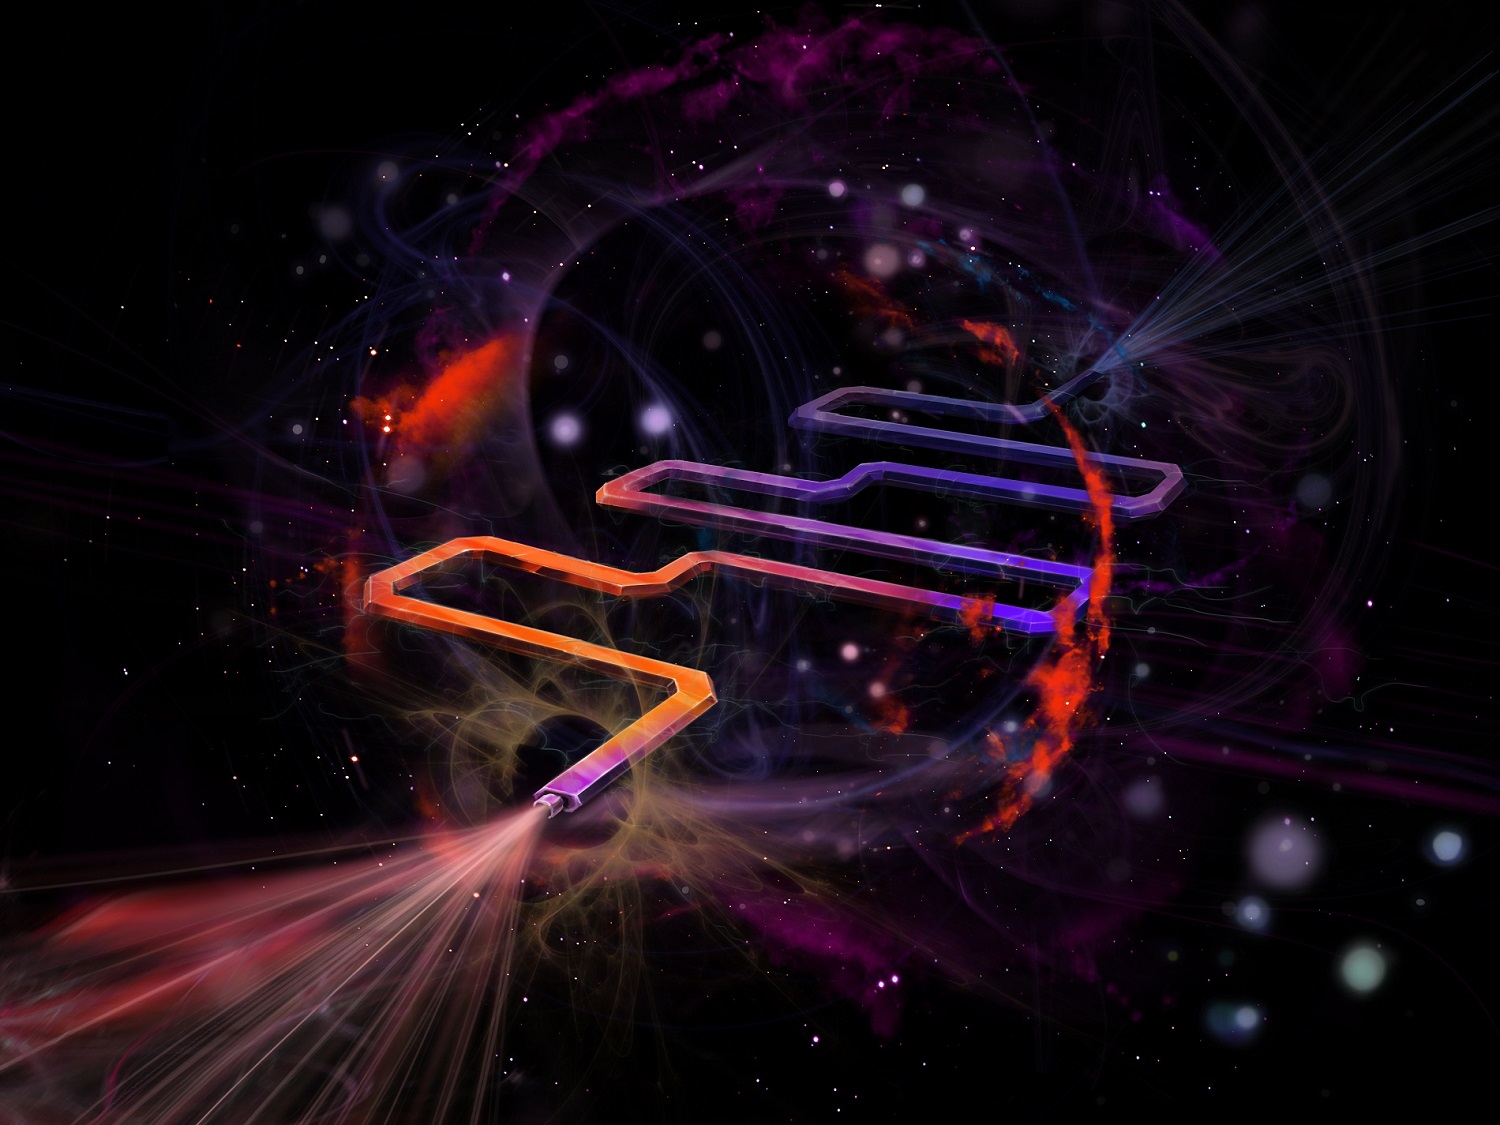 Artistic impression of a superconducting resonator coupled it its quantum-mechanical environment